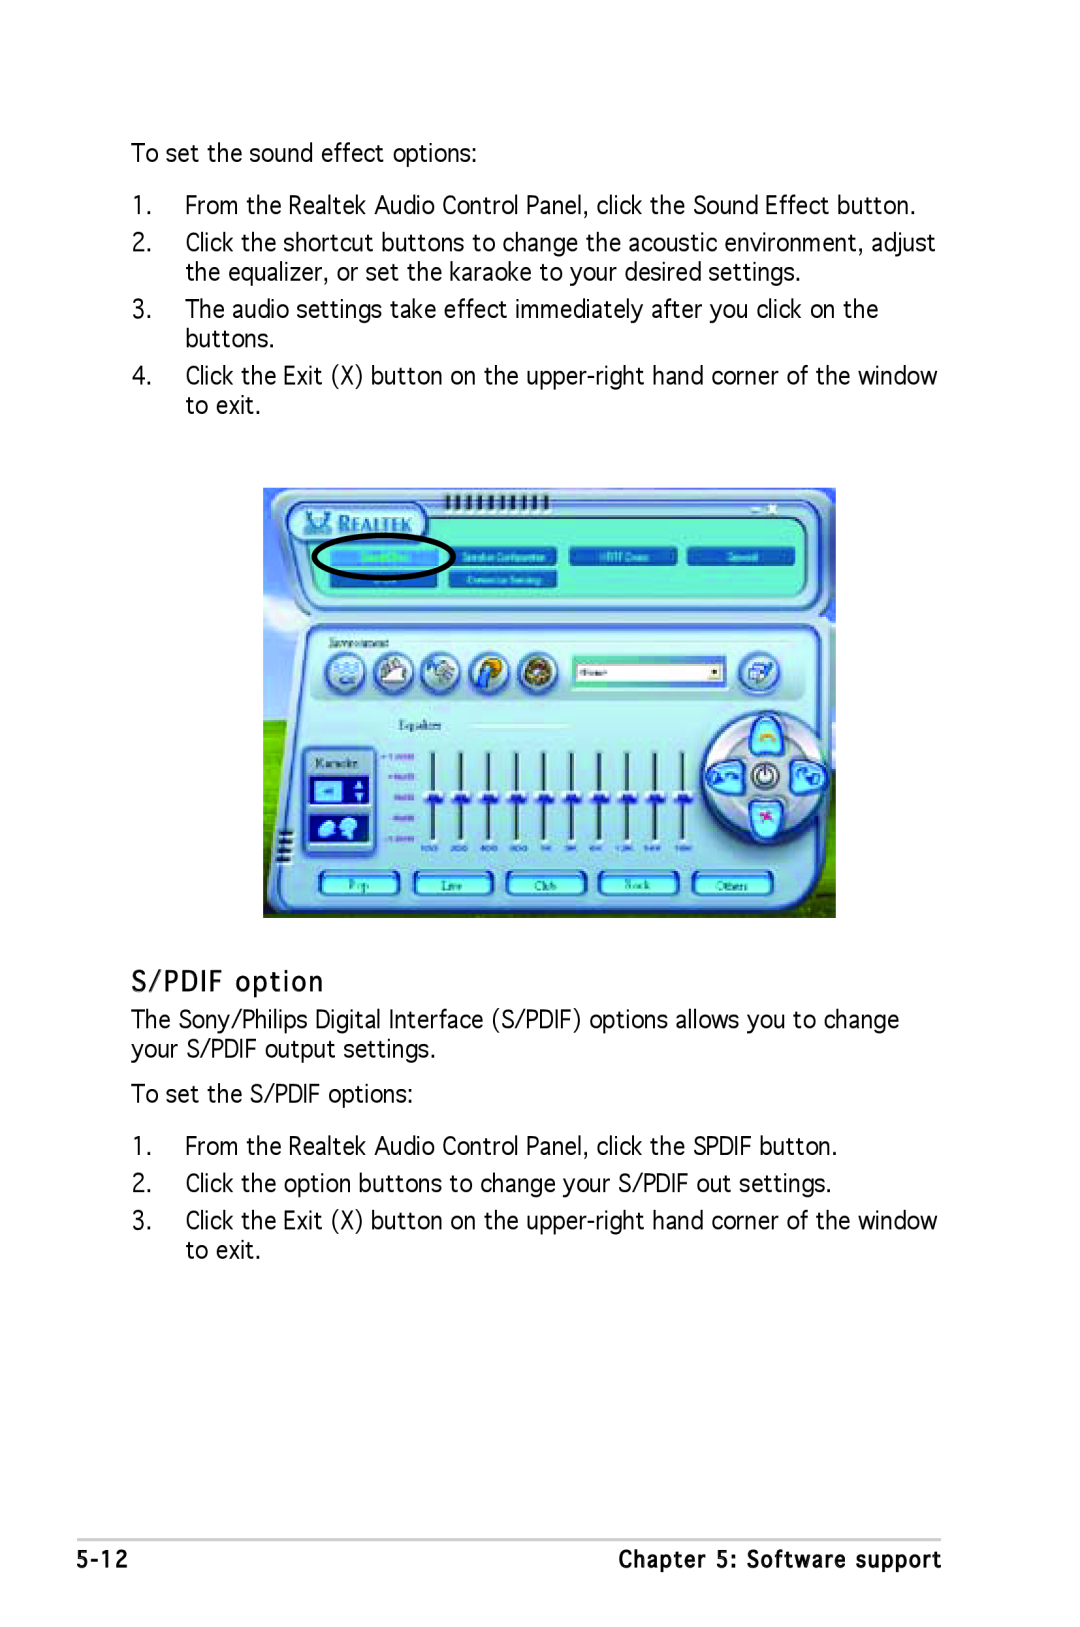 Asus A8N-SLI SE manual S/PDIF option 